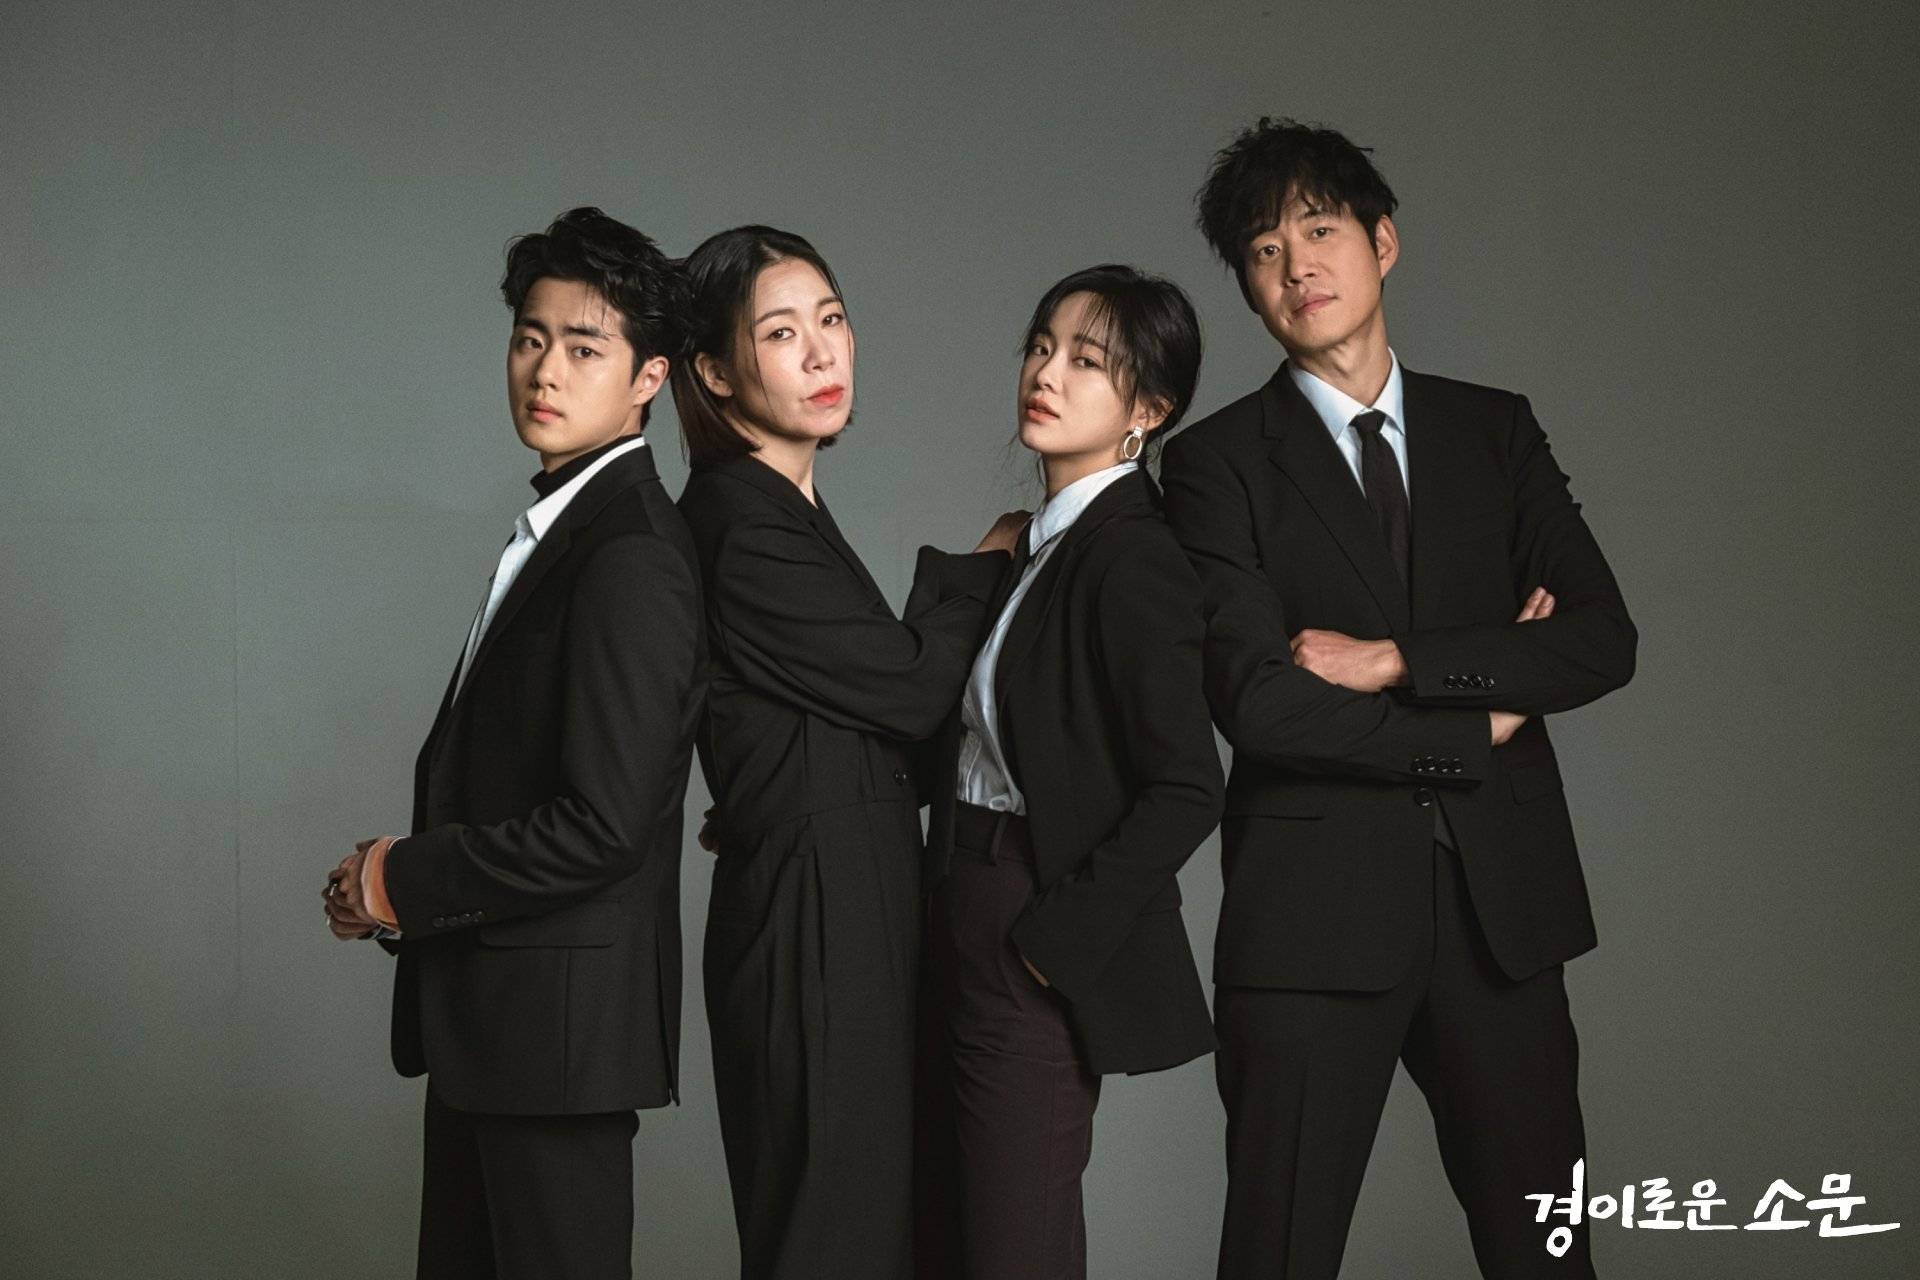 Photos Cast Photoshoot Added For The Korean Drama The Uncanny Counter Hancinema 6617